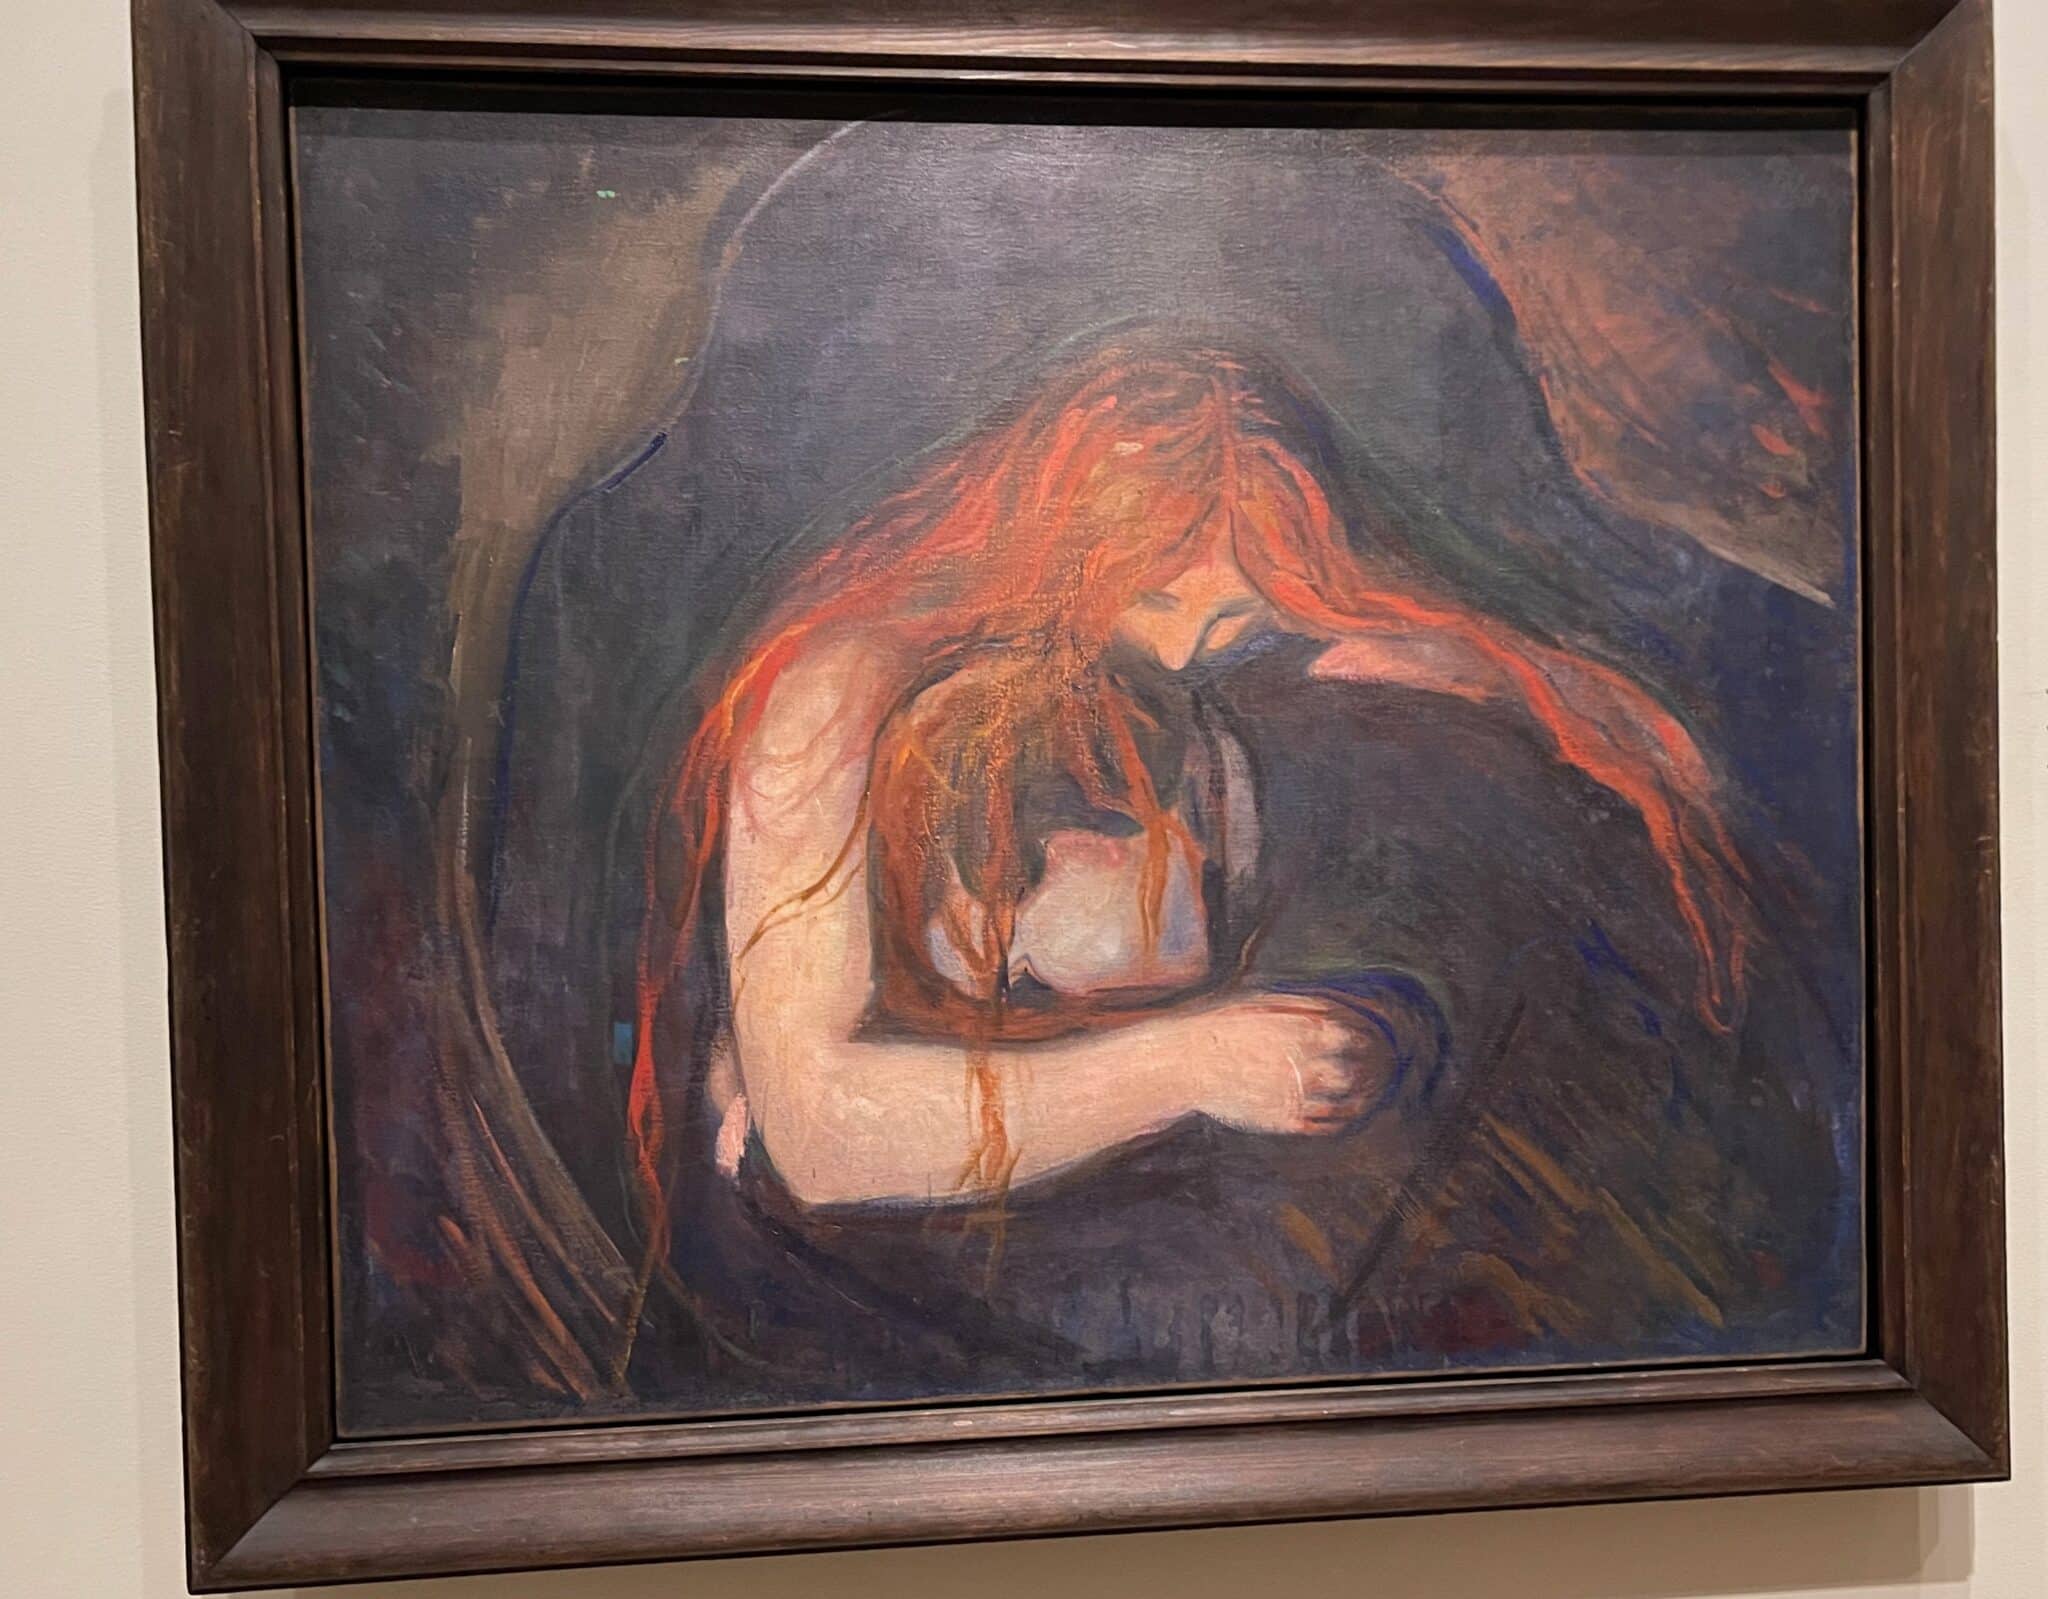 The vampire painting by Edvard Munch